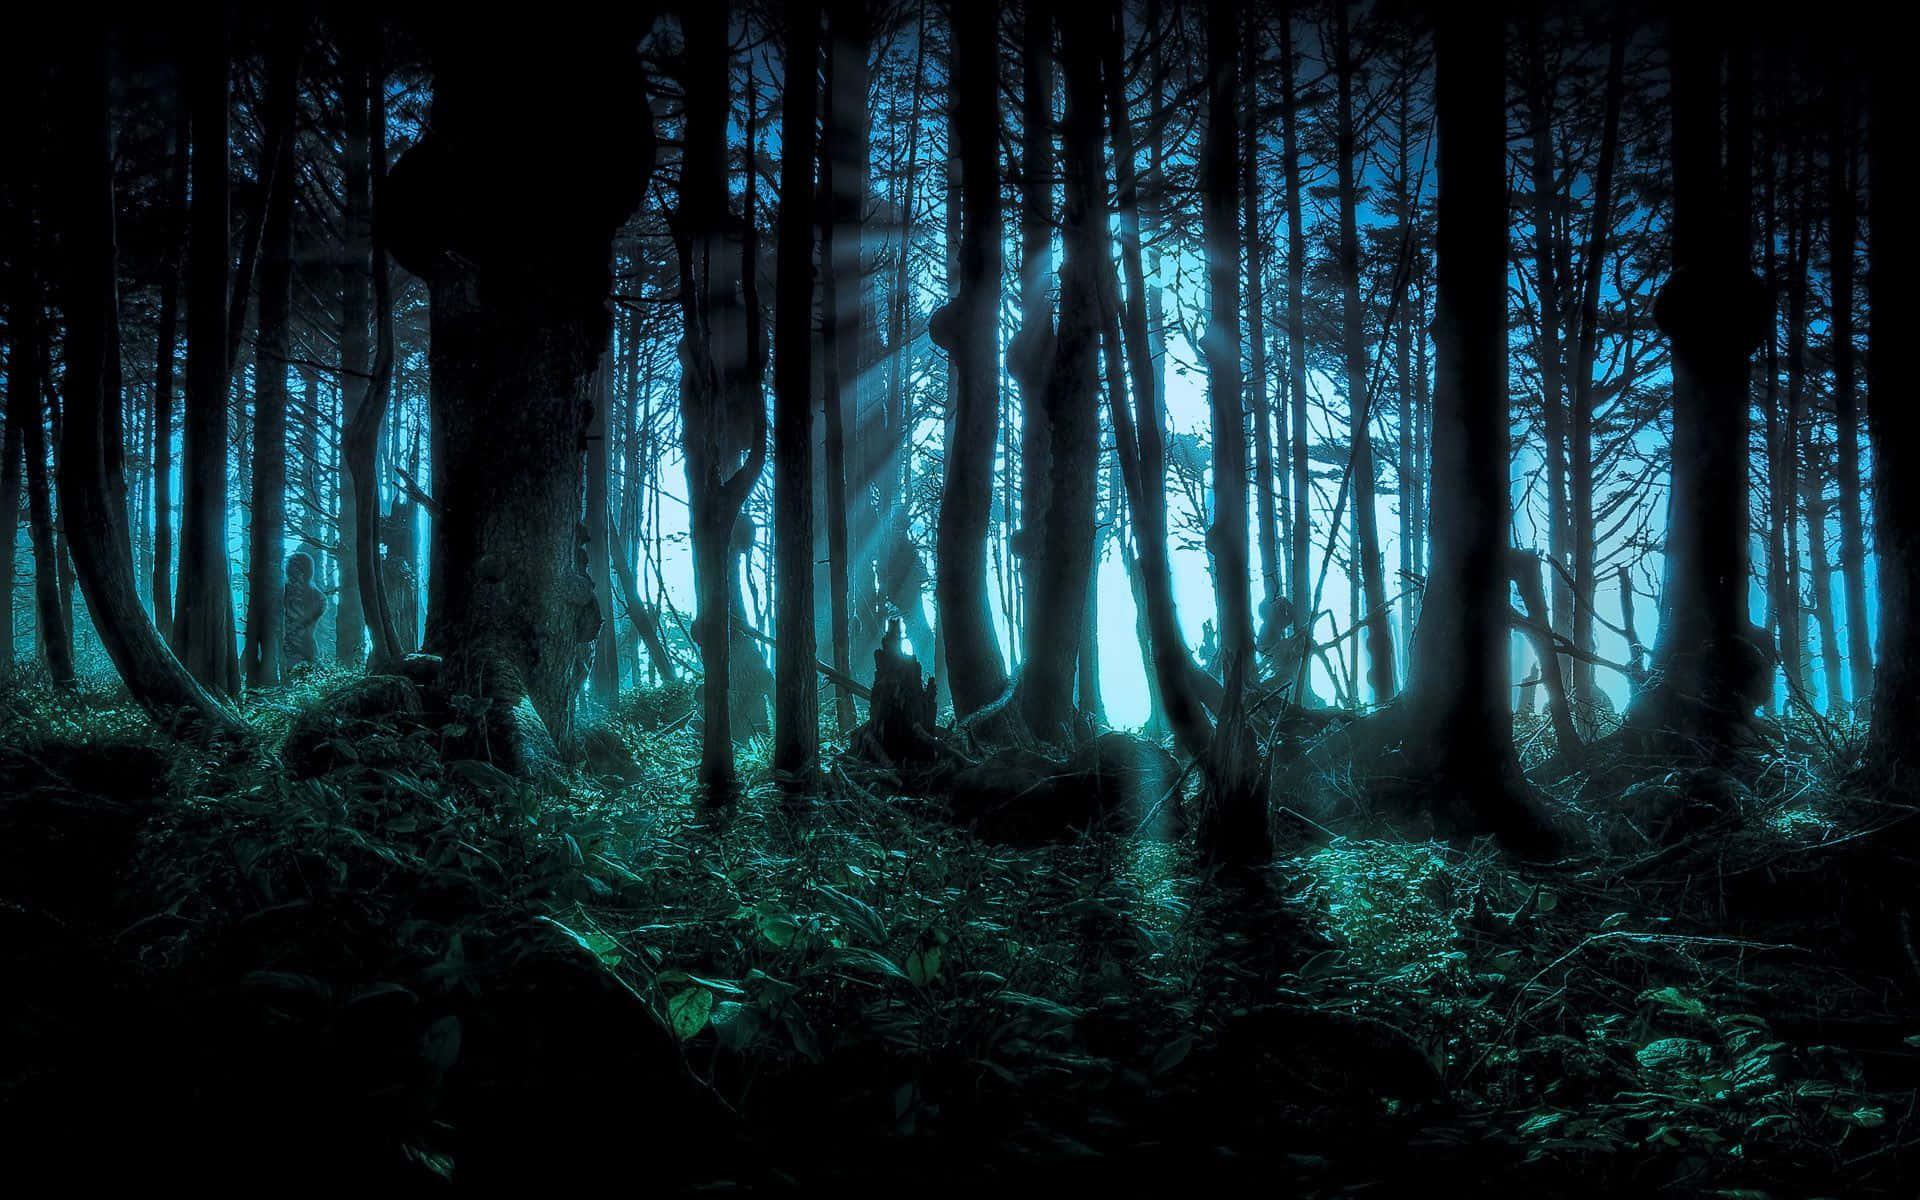 The Dark Forest Awakens